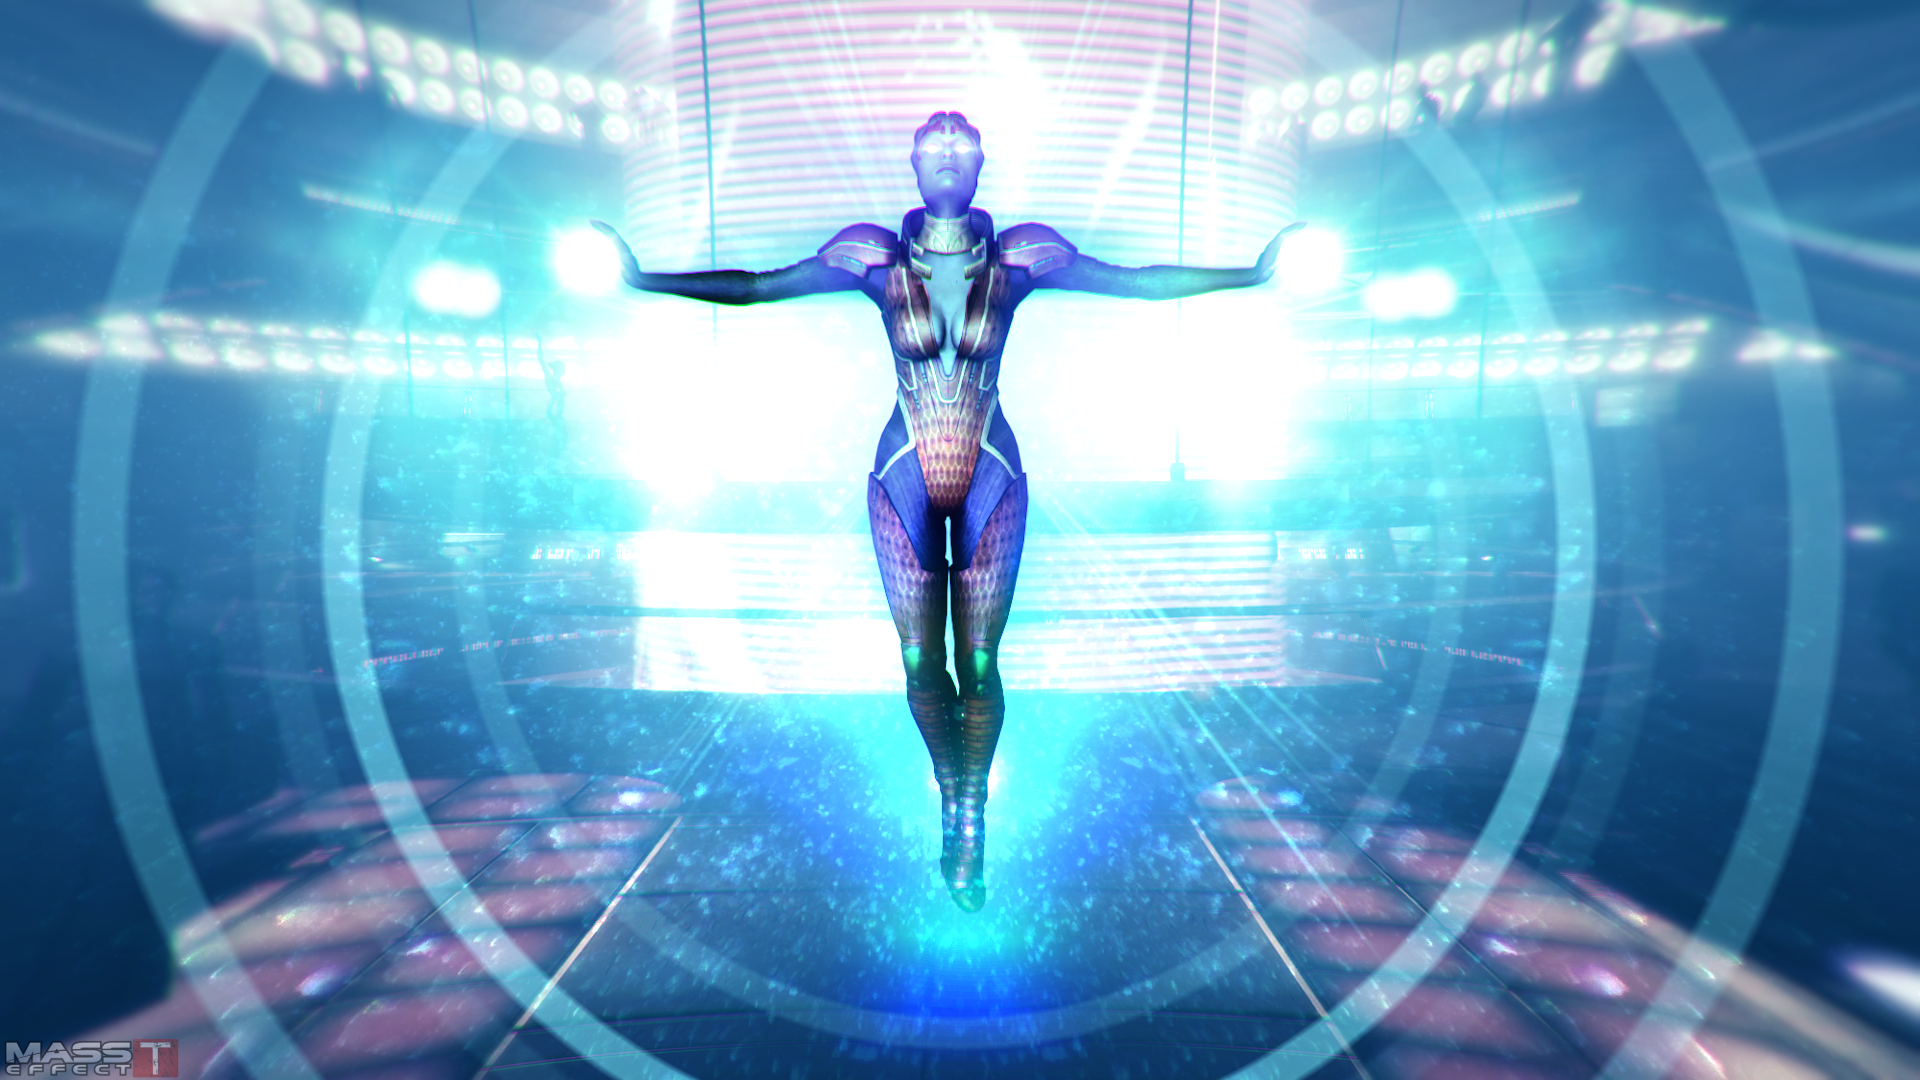 General 1920x1080 video games Mass Effect 2 Asari Samara cyan science fiction science fiction women PC gaming Mass Effect glowing eyes video game girls